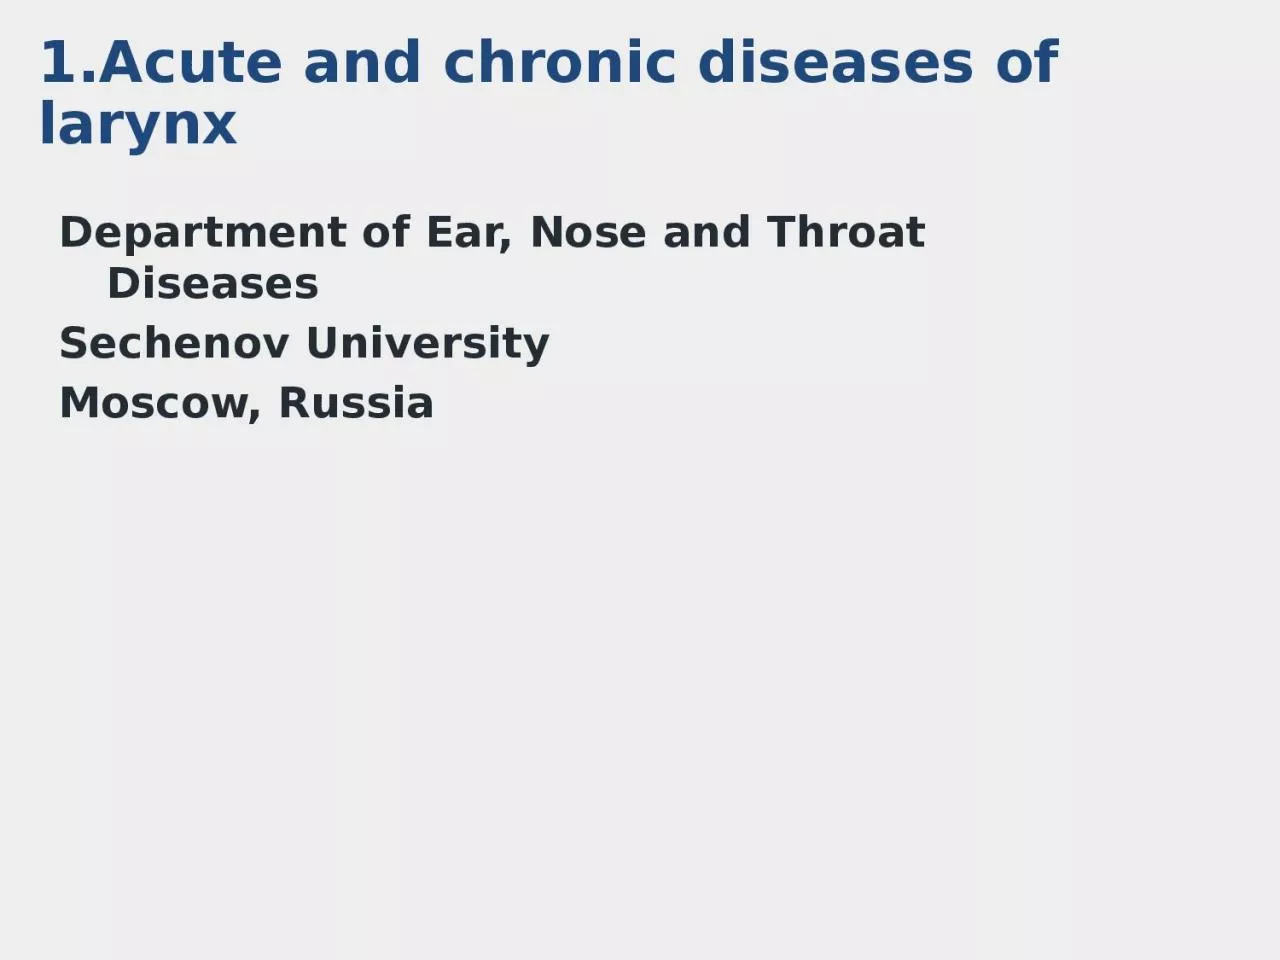 1. Acute and chronic diseases of larynx